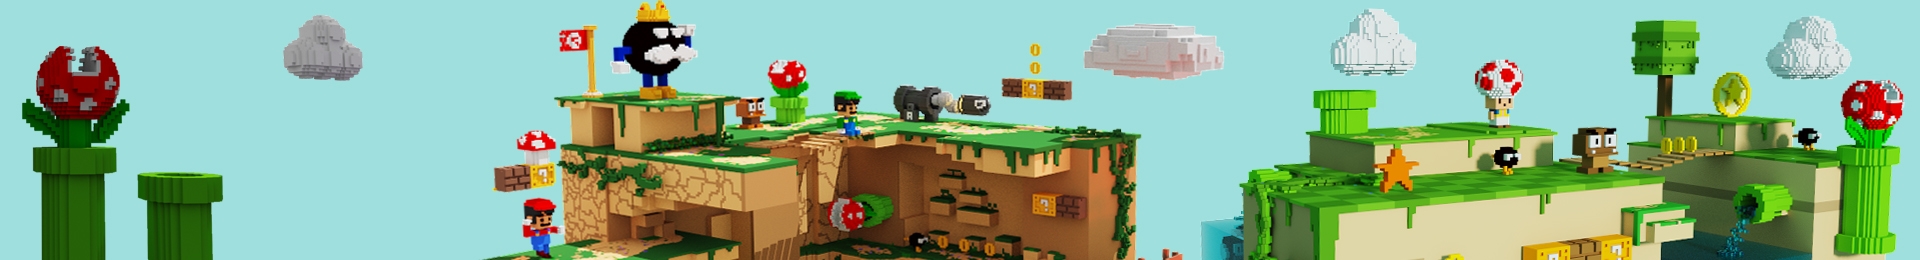 Mario in enemy land banner